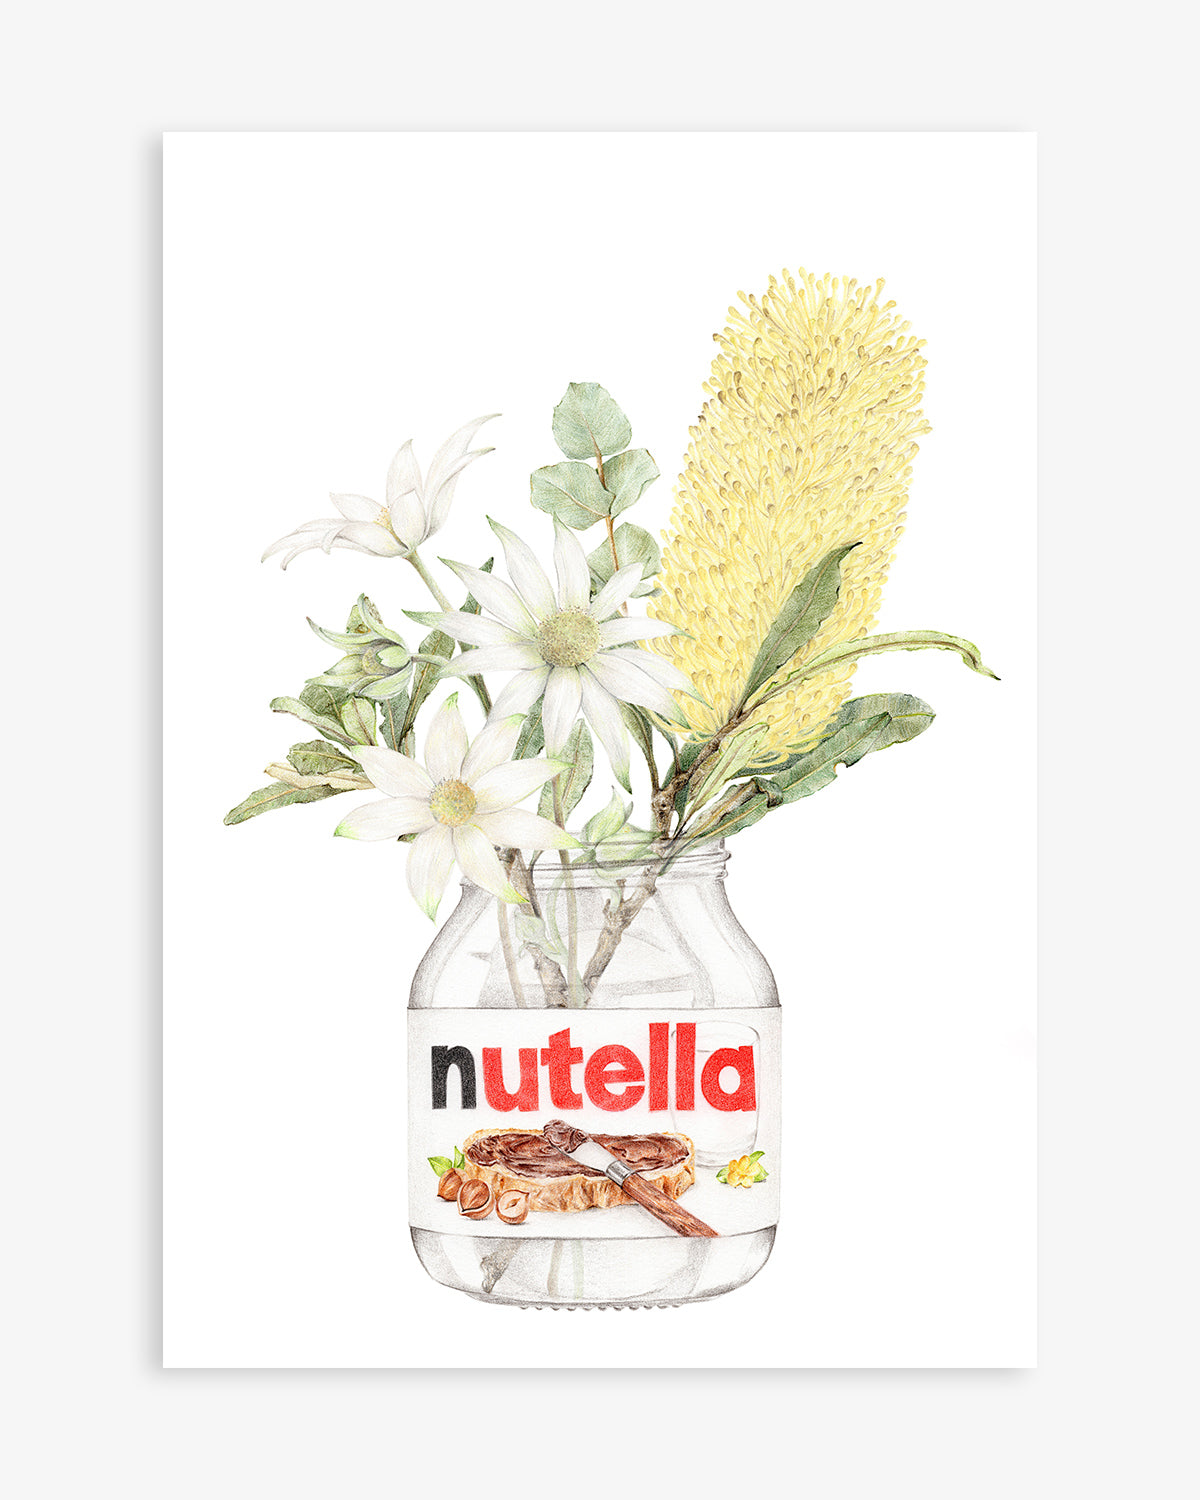 Nutella with Banksia botanical art print